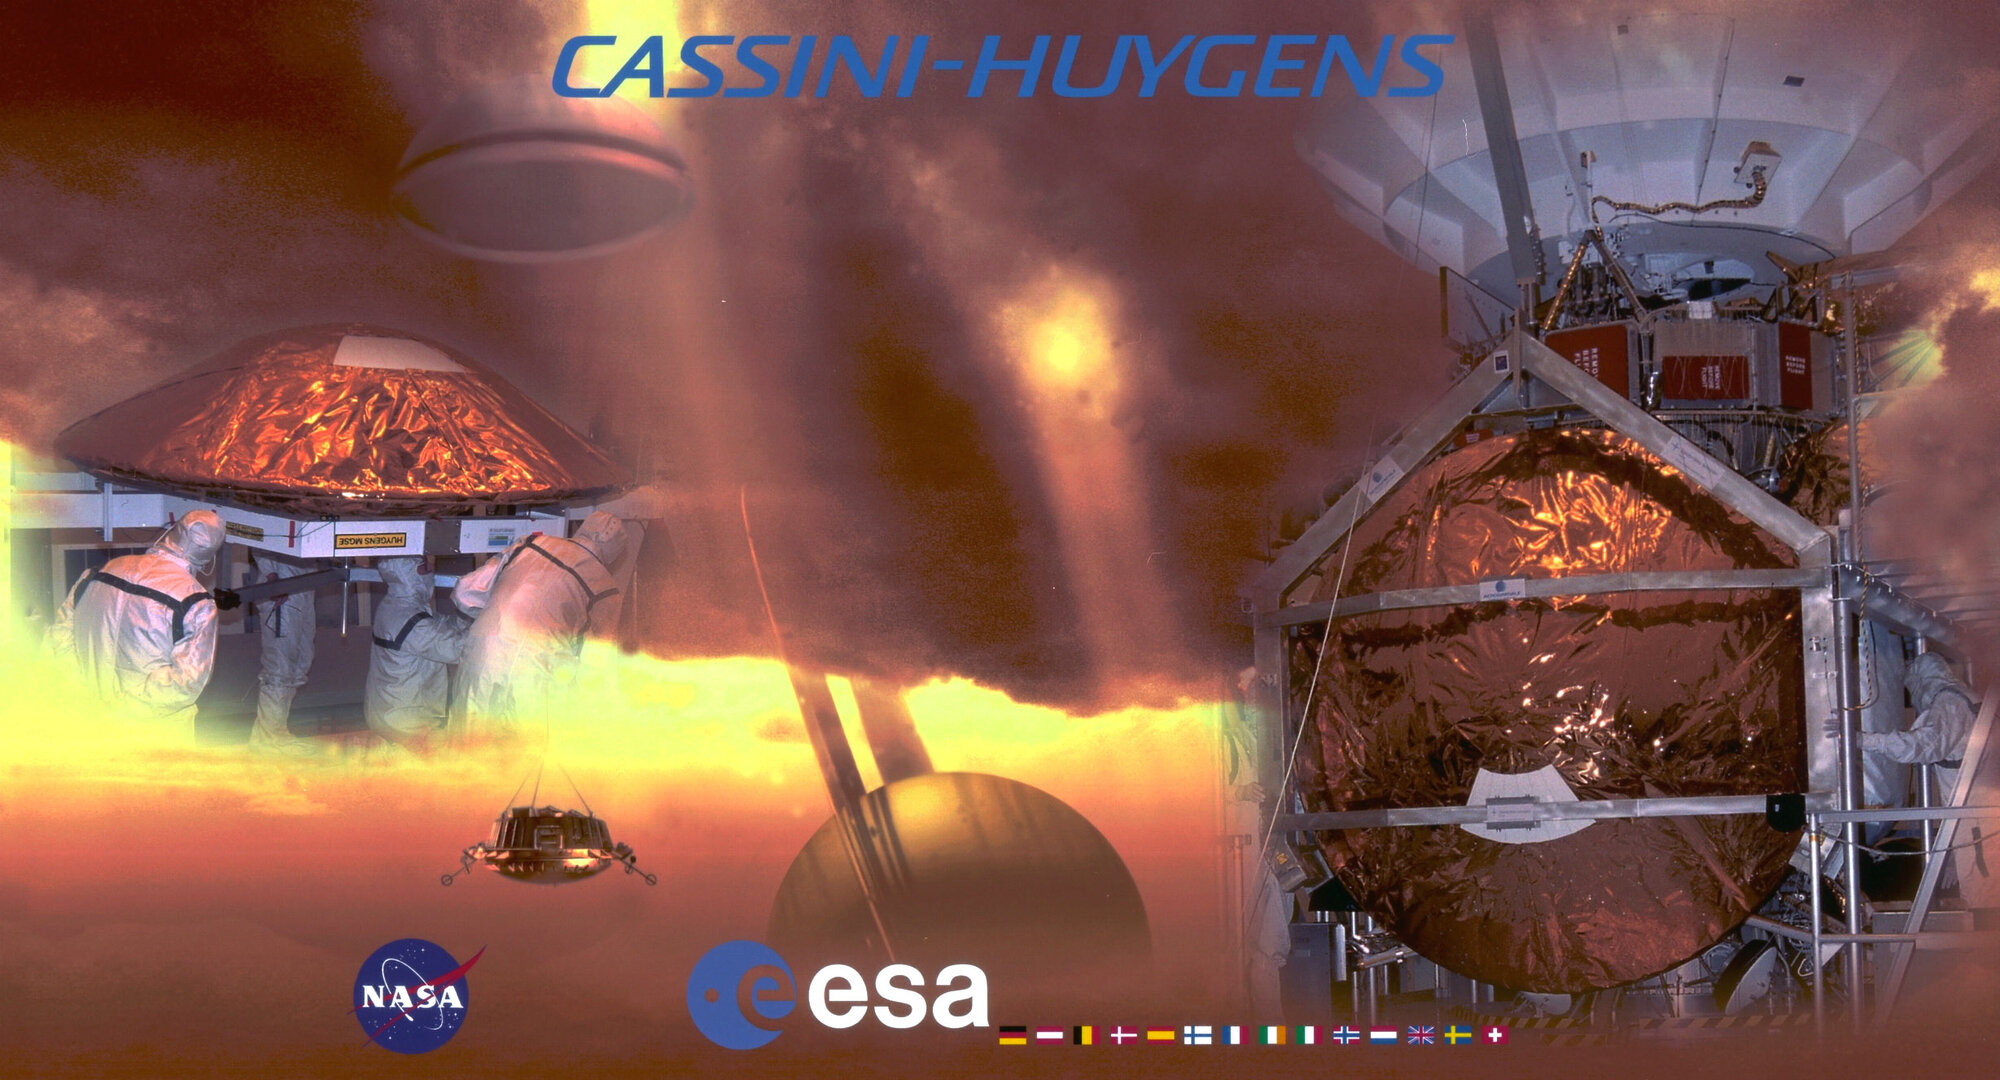 Cassini/Huygens image montage